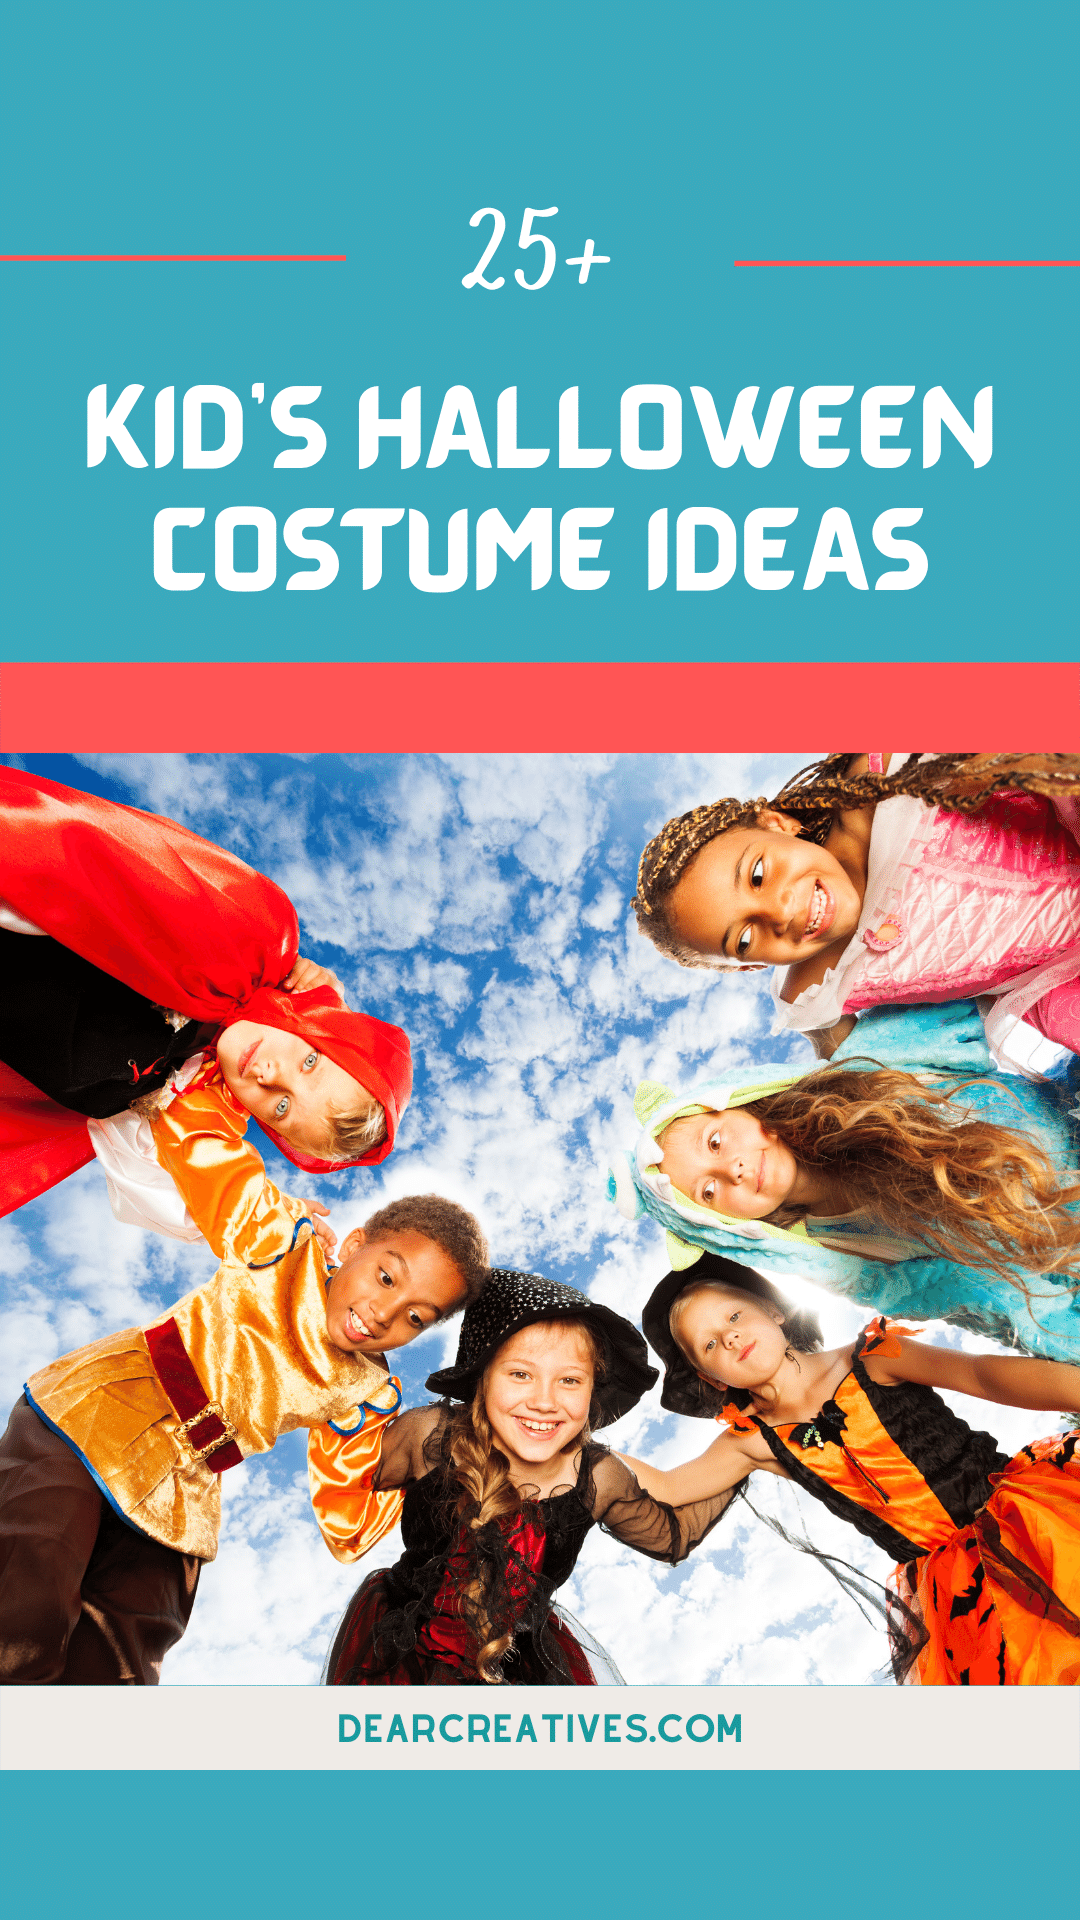 Kid’s Halloween Costume Ideas – 25+Costumes!